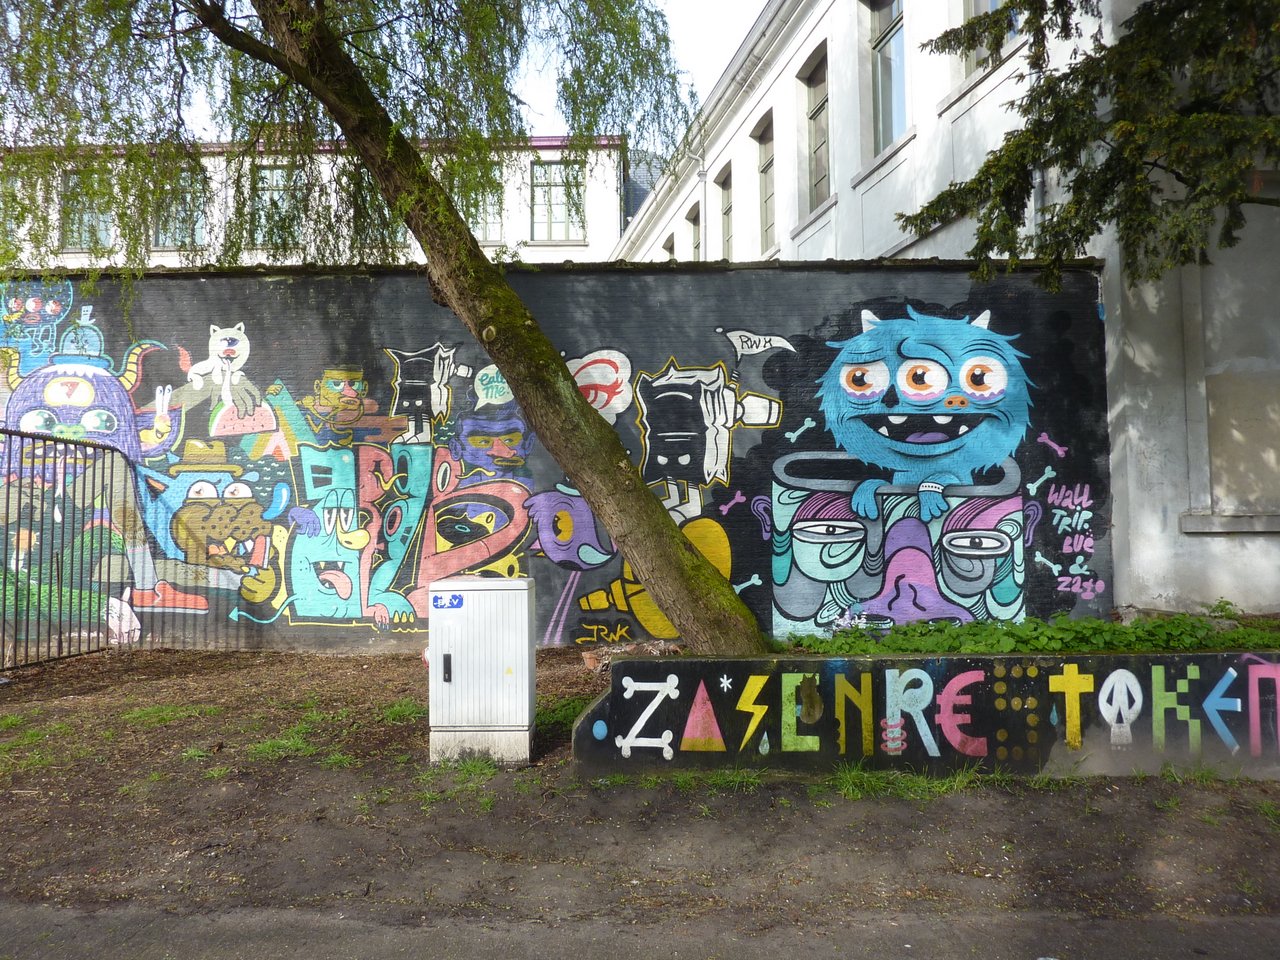 Street art e Graffiti di Gent: bue the warrior